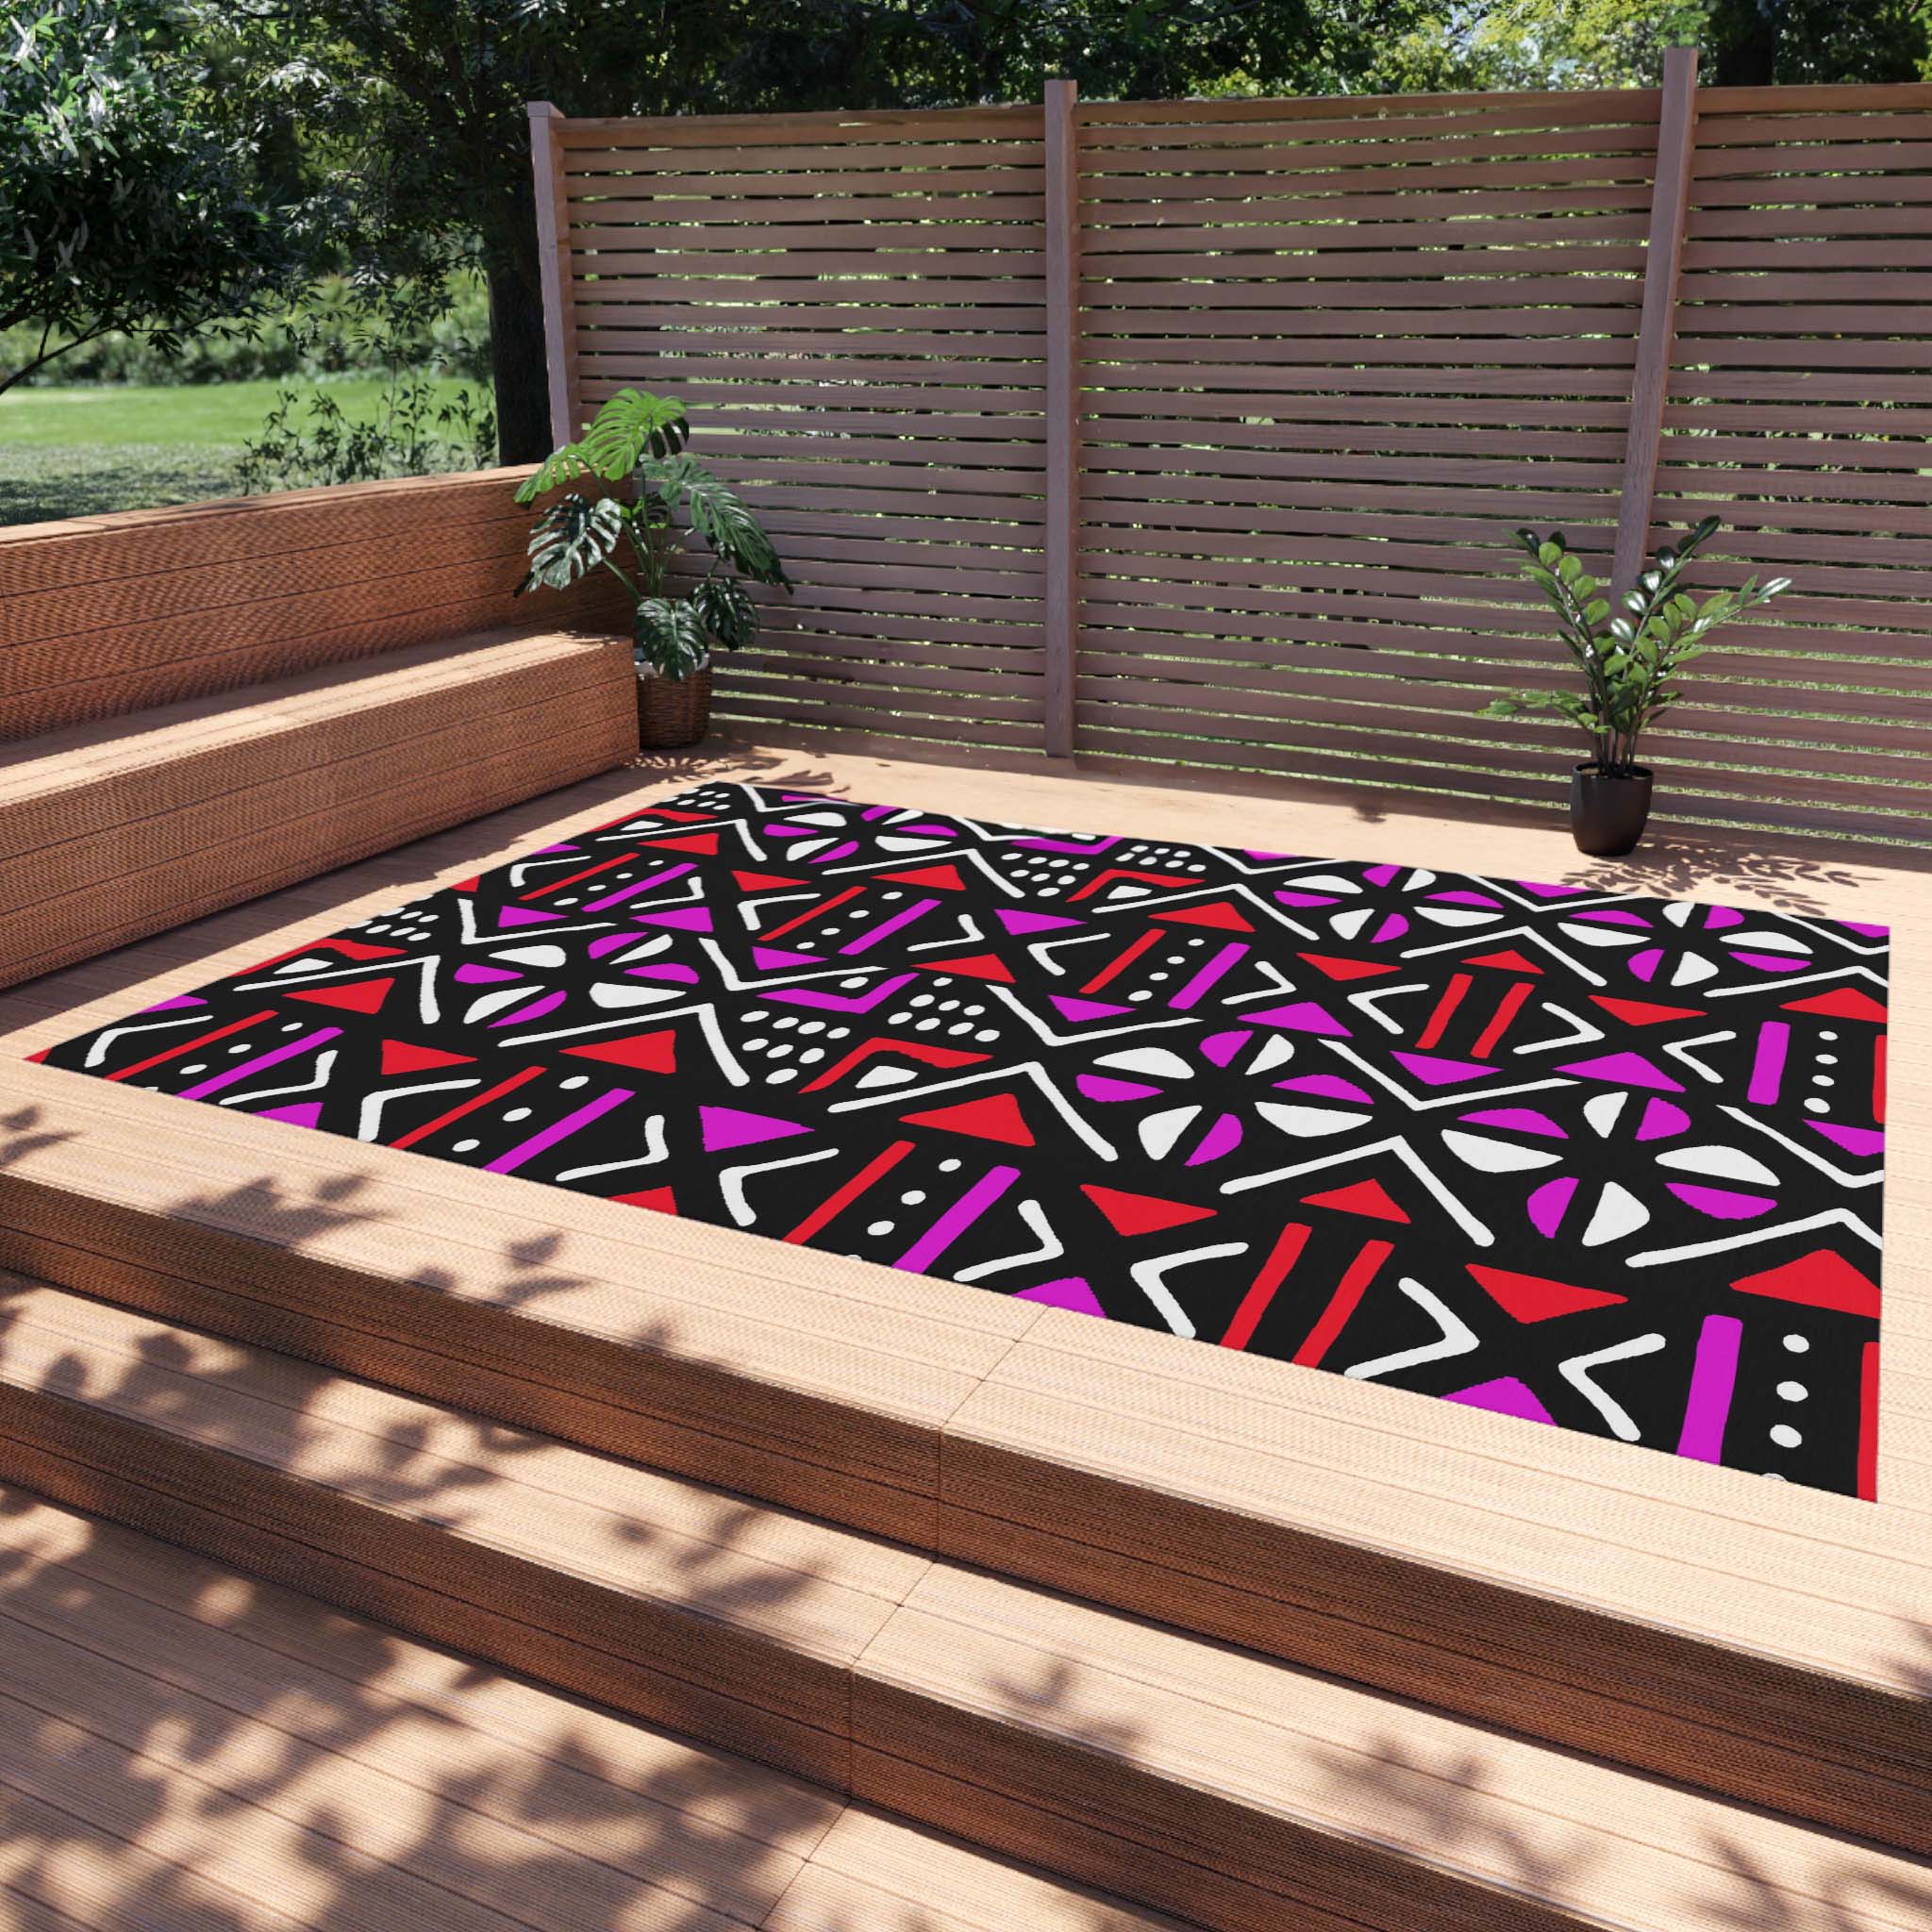 Habitat Outdoor African Rug Mudcloth Print Carpet - ByneloHabitat Outdoor African Rug Mudcloth Print Carpet - Bynelo